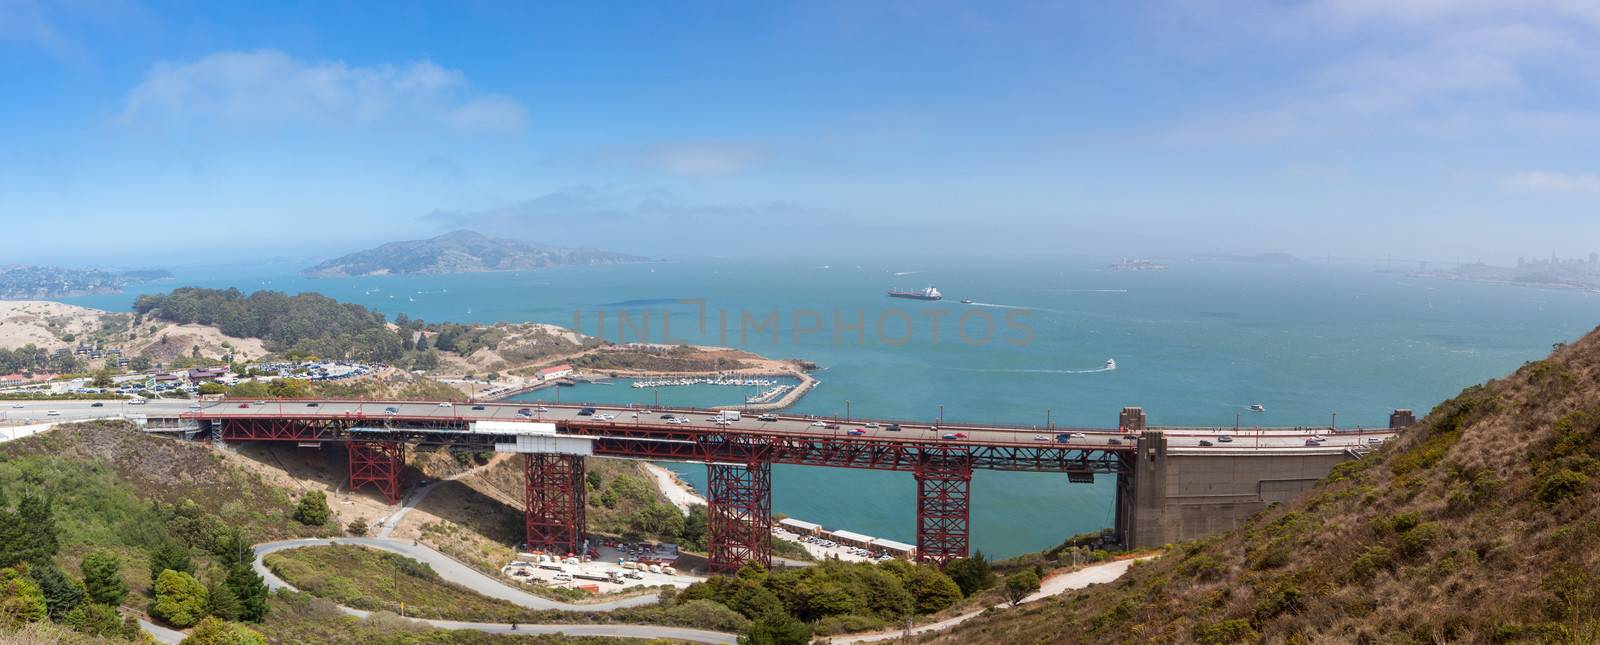 Entrance of the Golden Gate under restoration by watchtheworld